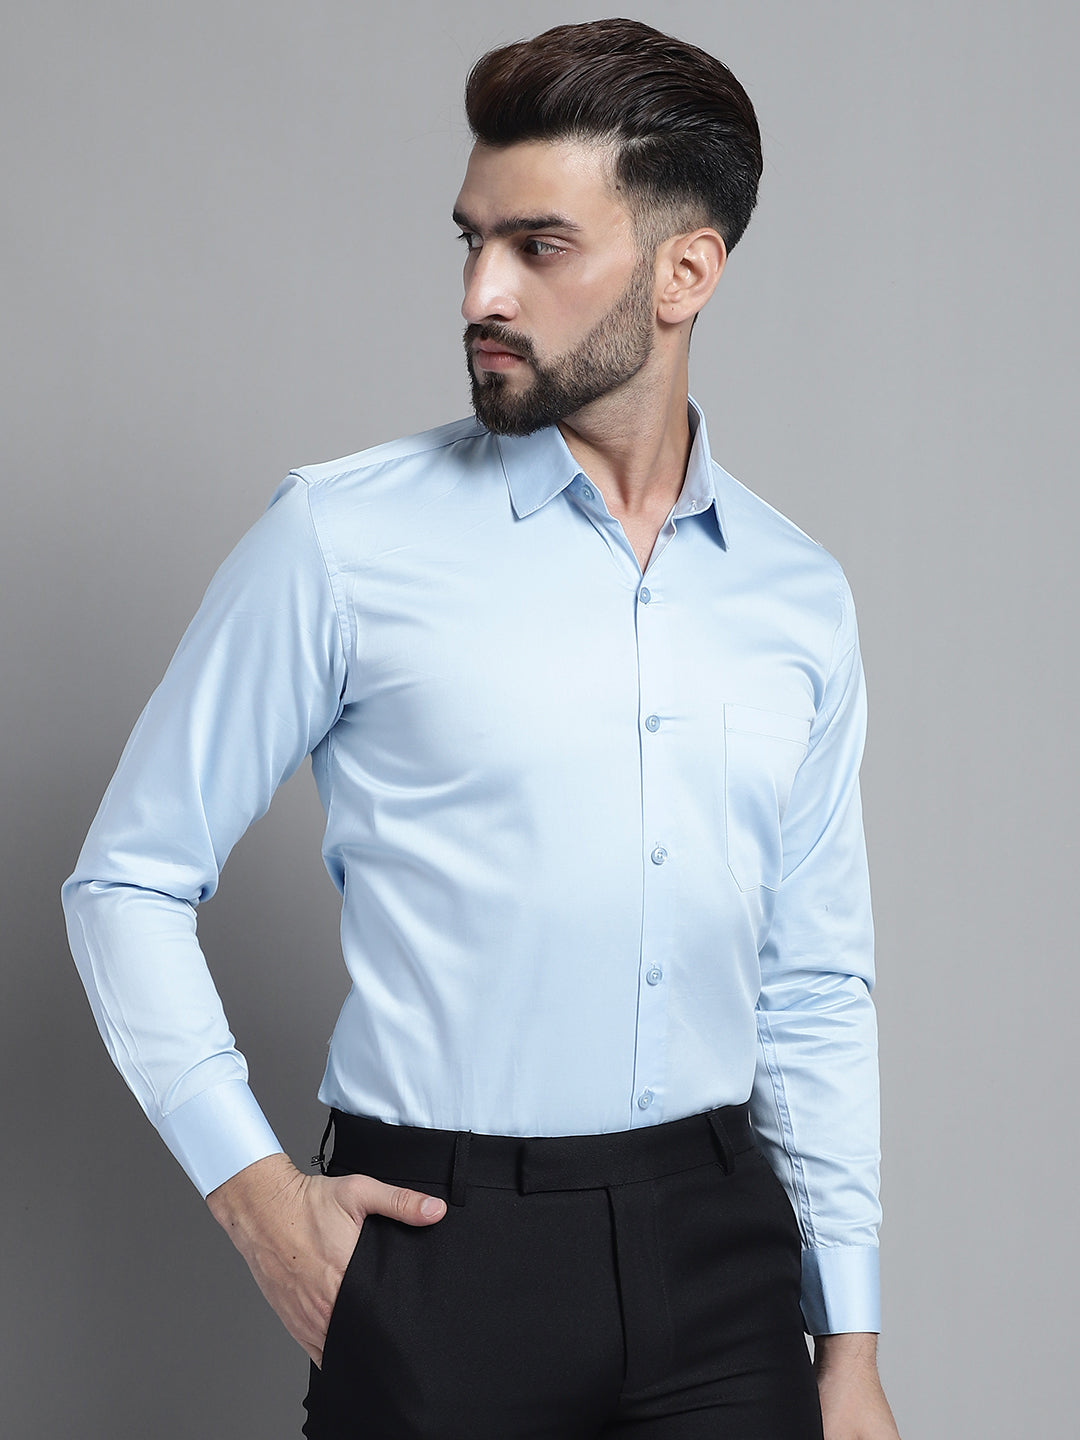 Men's Cotton Solid Formal Shirt